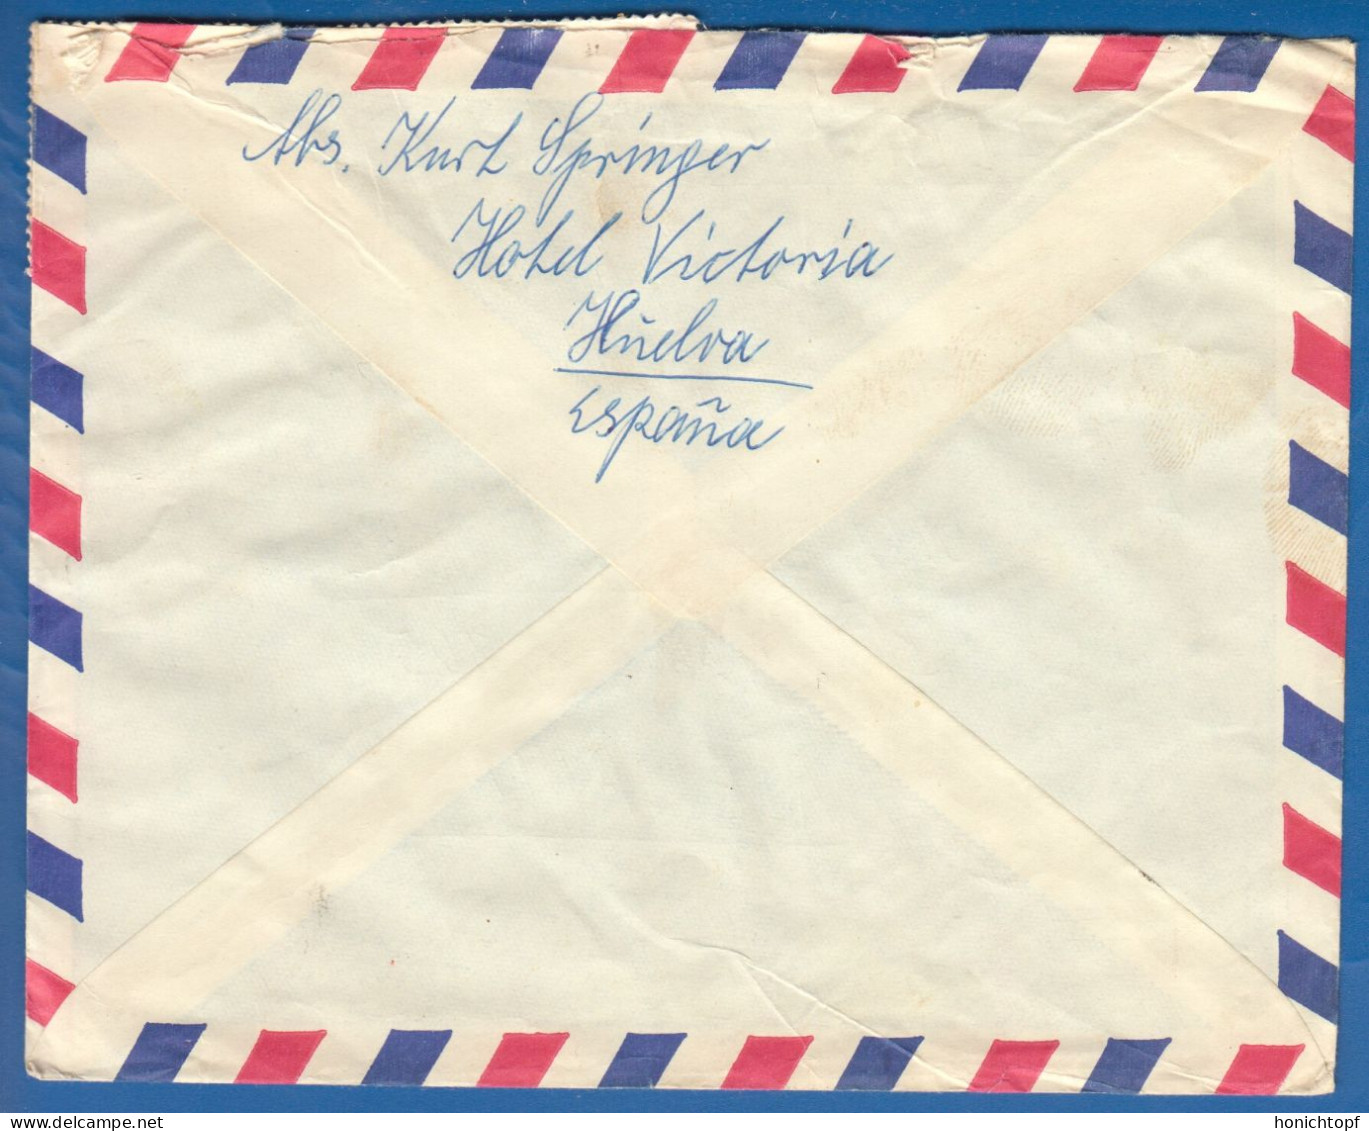 Spanien; Correo Aereo; 1966; Cover / Letter Huelva To Germany - Brieven En Documenten